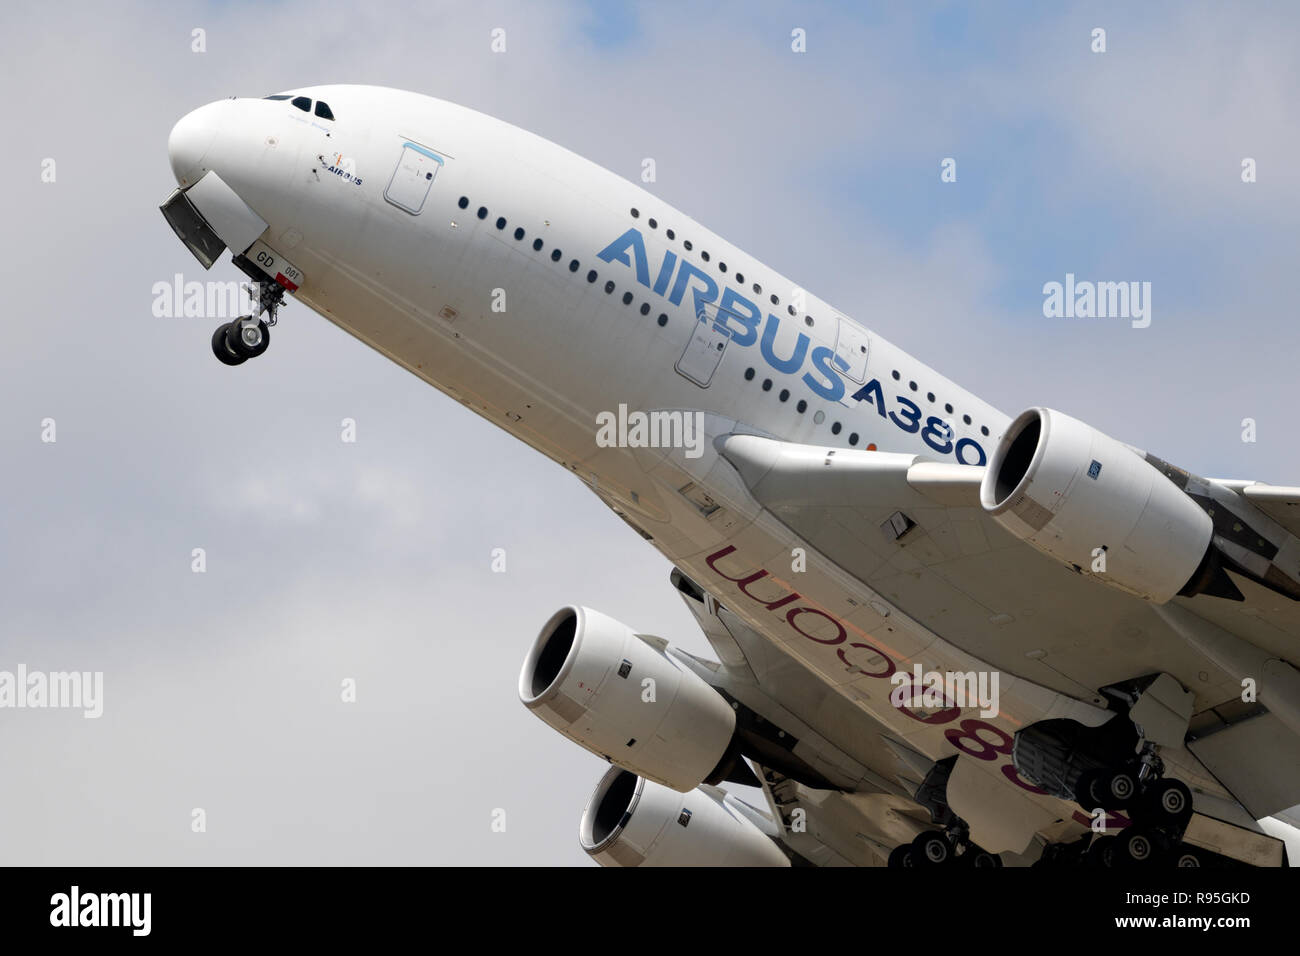 PARIS, FRANCE - JUN 23, 2017: Airbus A380 airliner plane taking off during the Paris Air Show 2017 Stock Photo